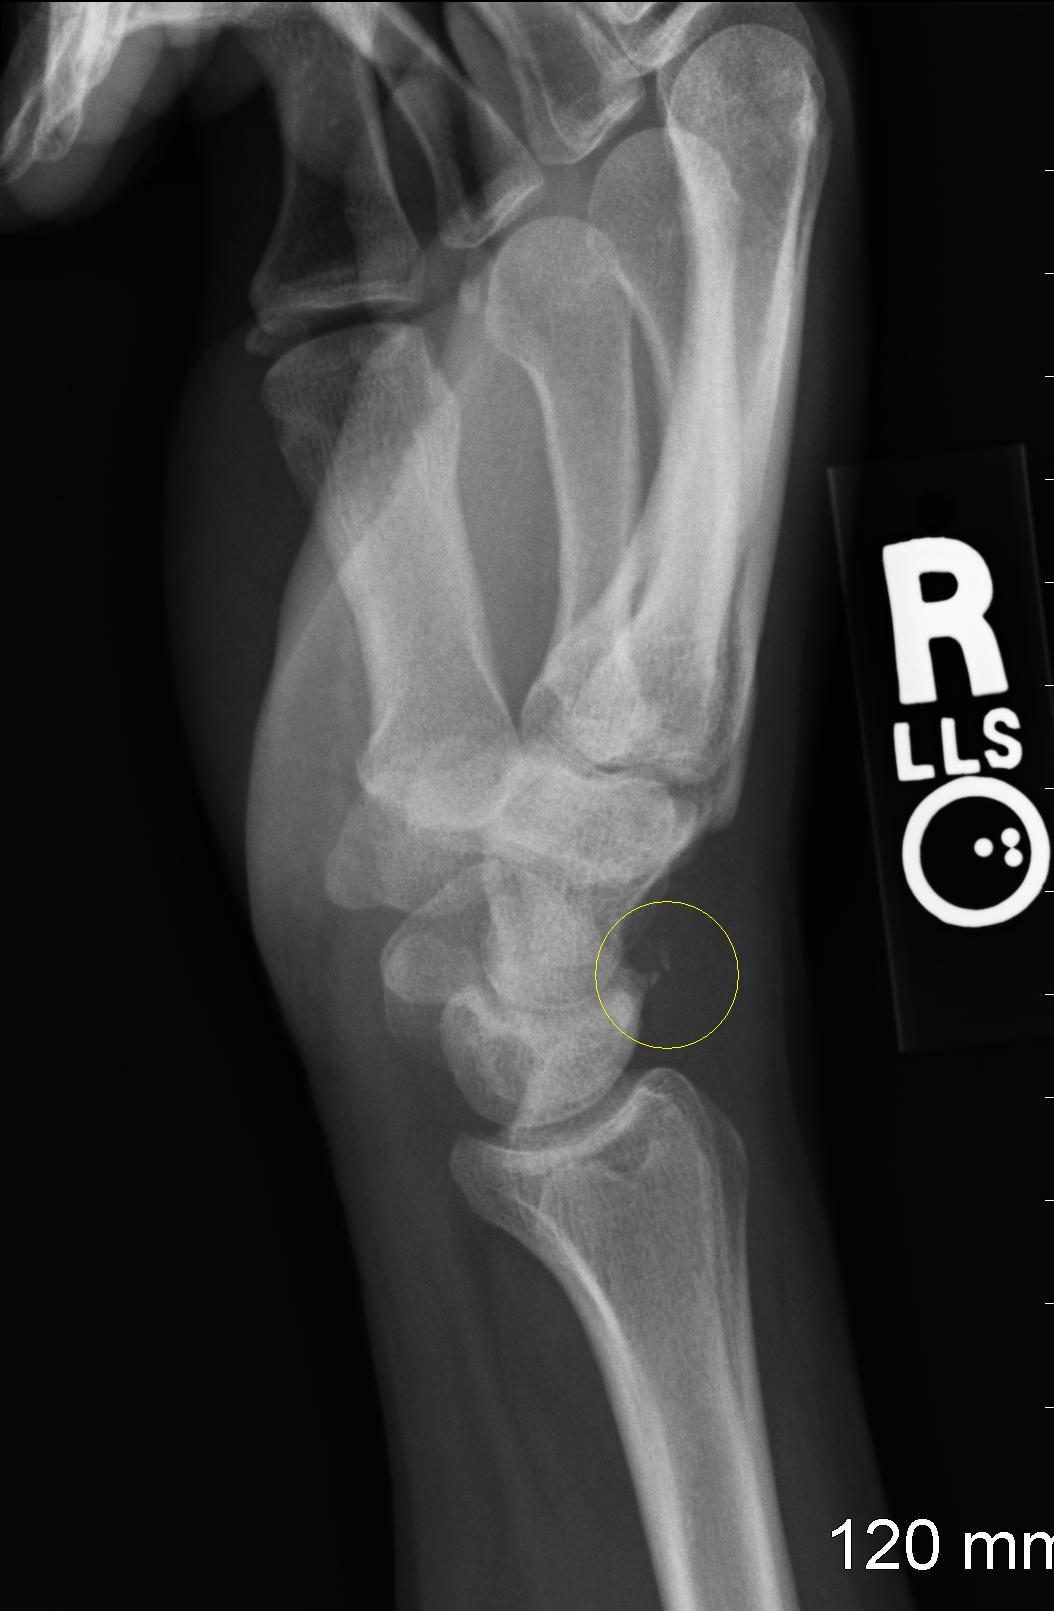 Avulsion fracture off lunate bone